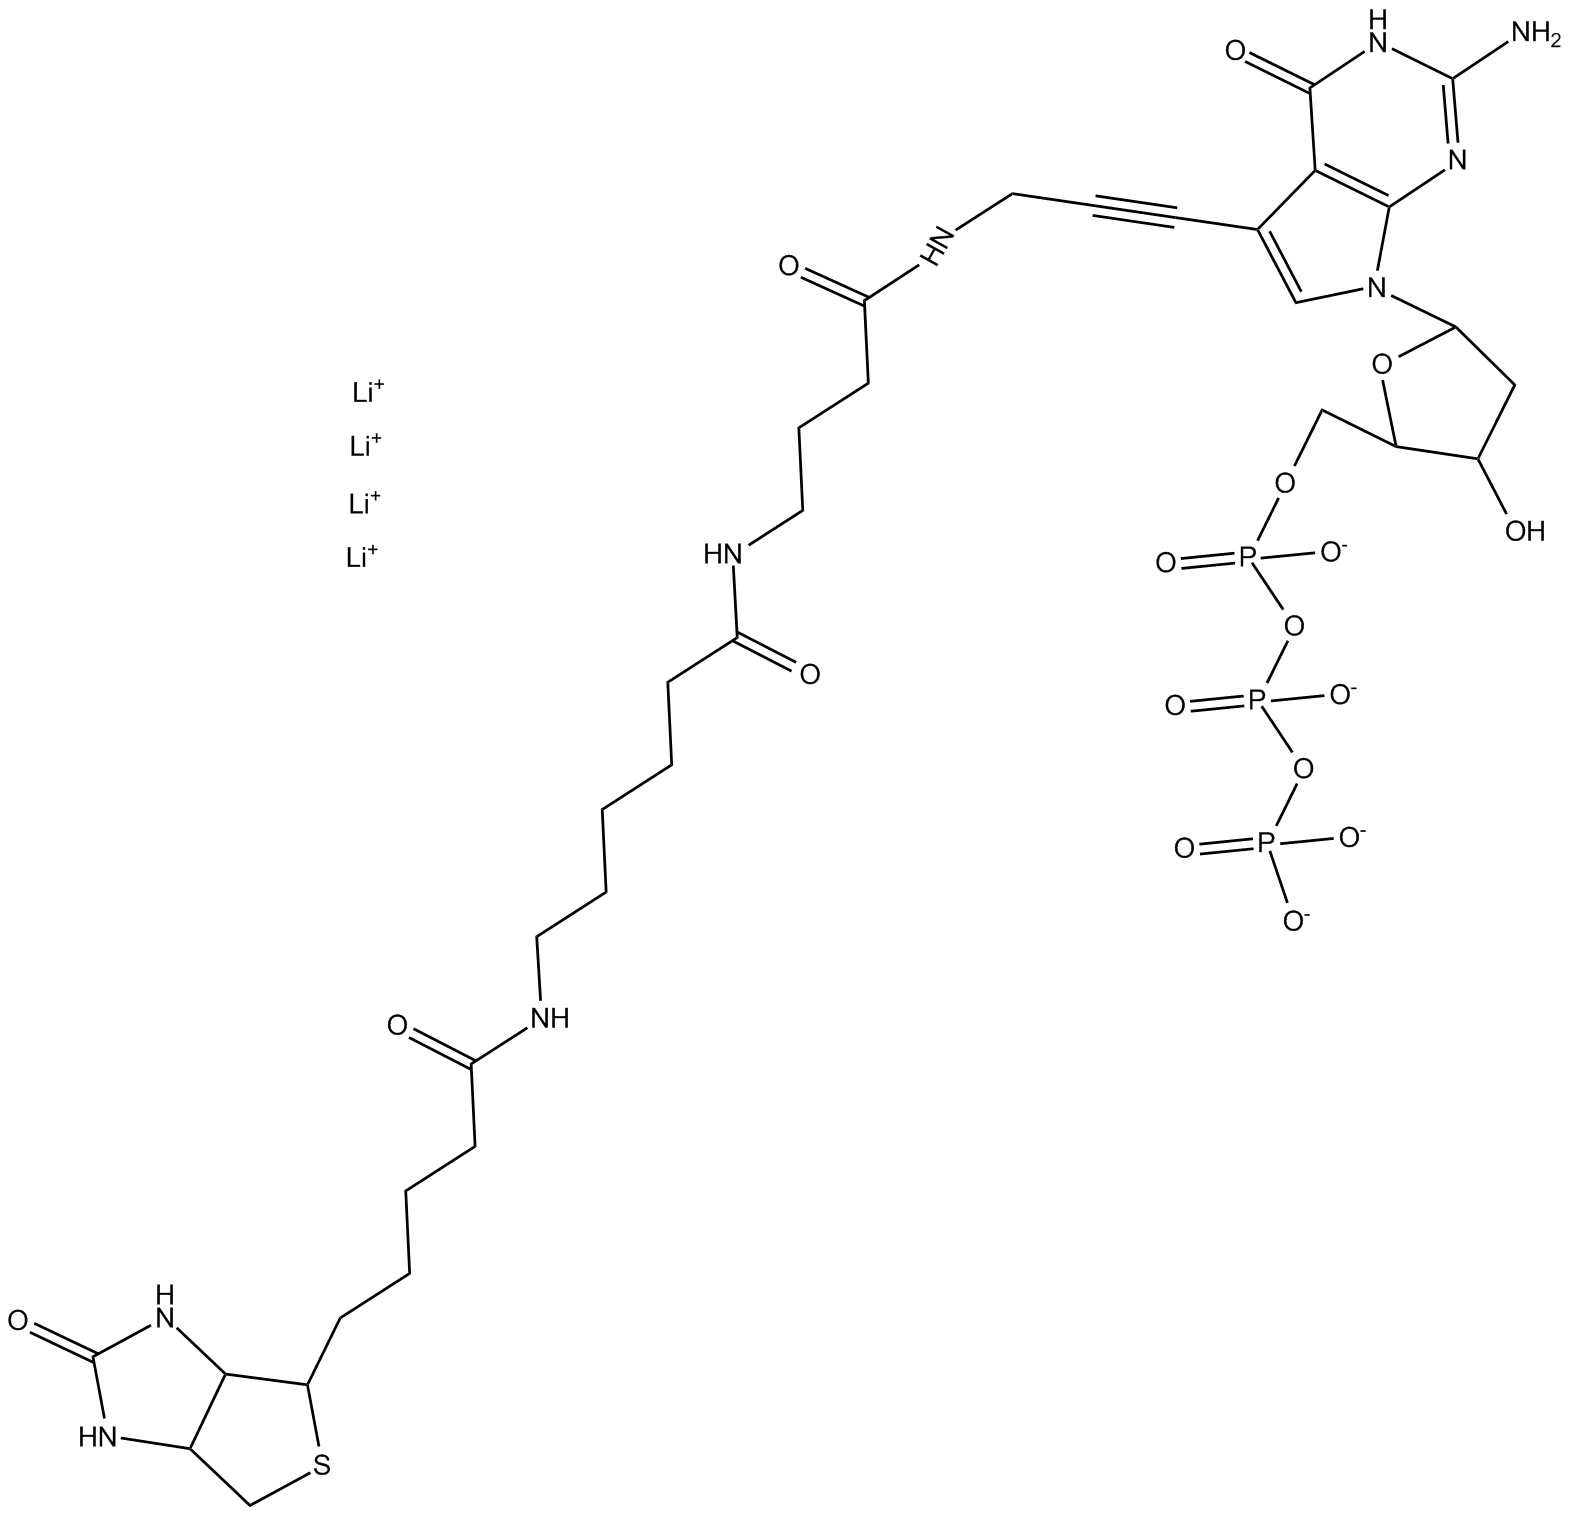 Biotin-16-dGTP  Chemical Structure